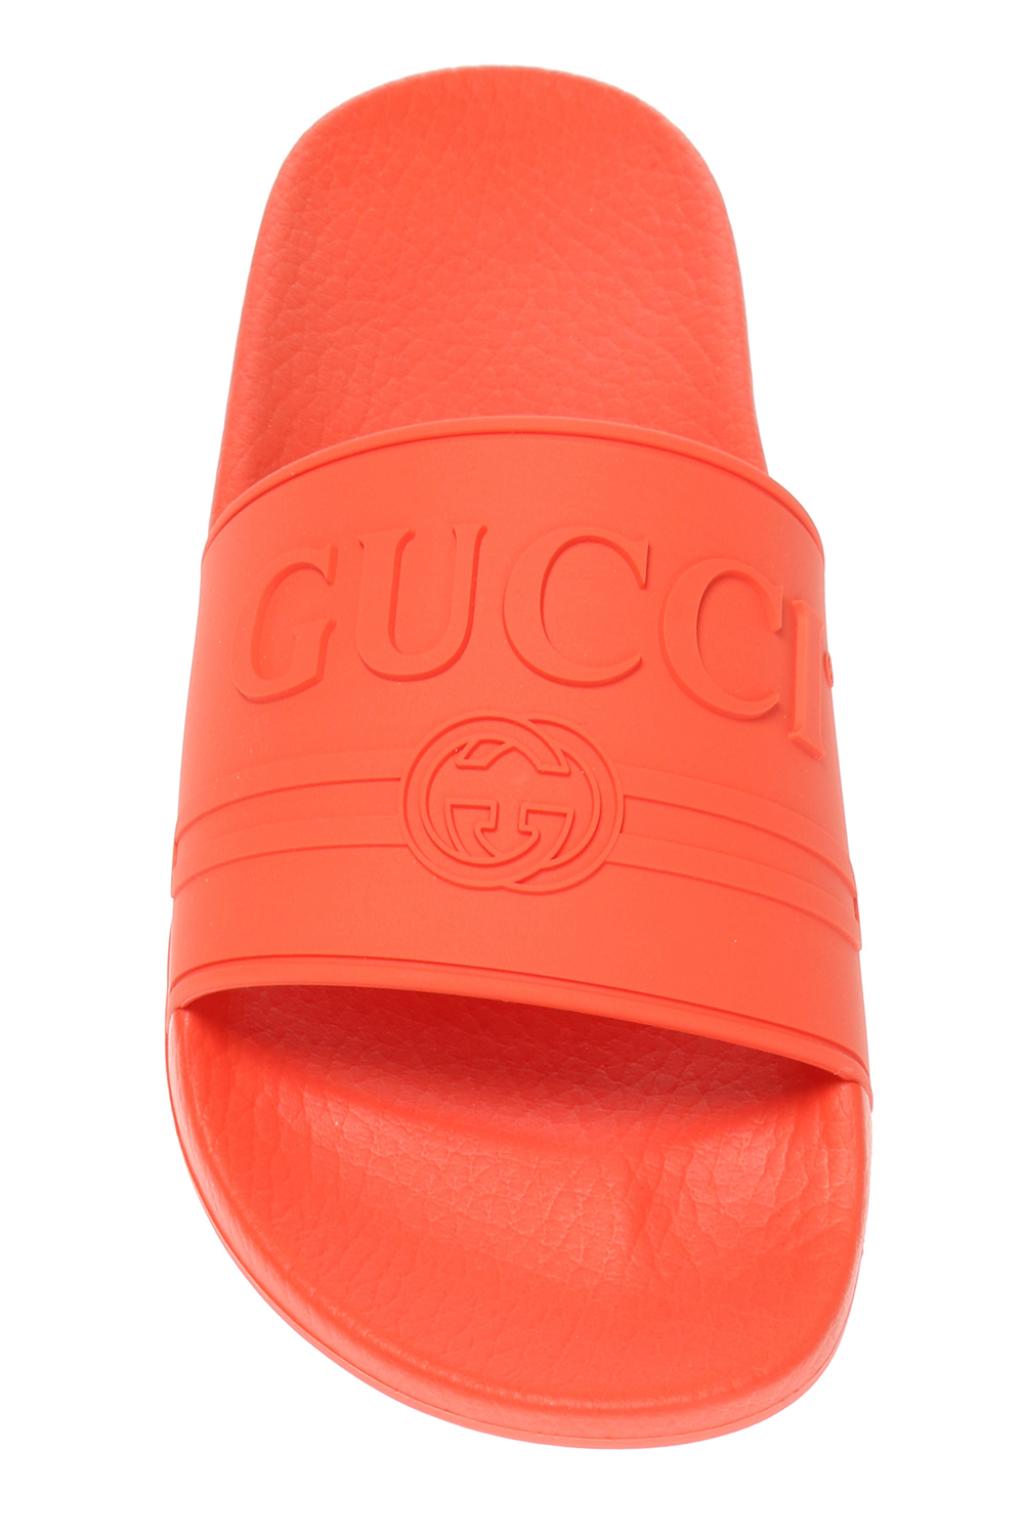 gucci slides orange